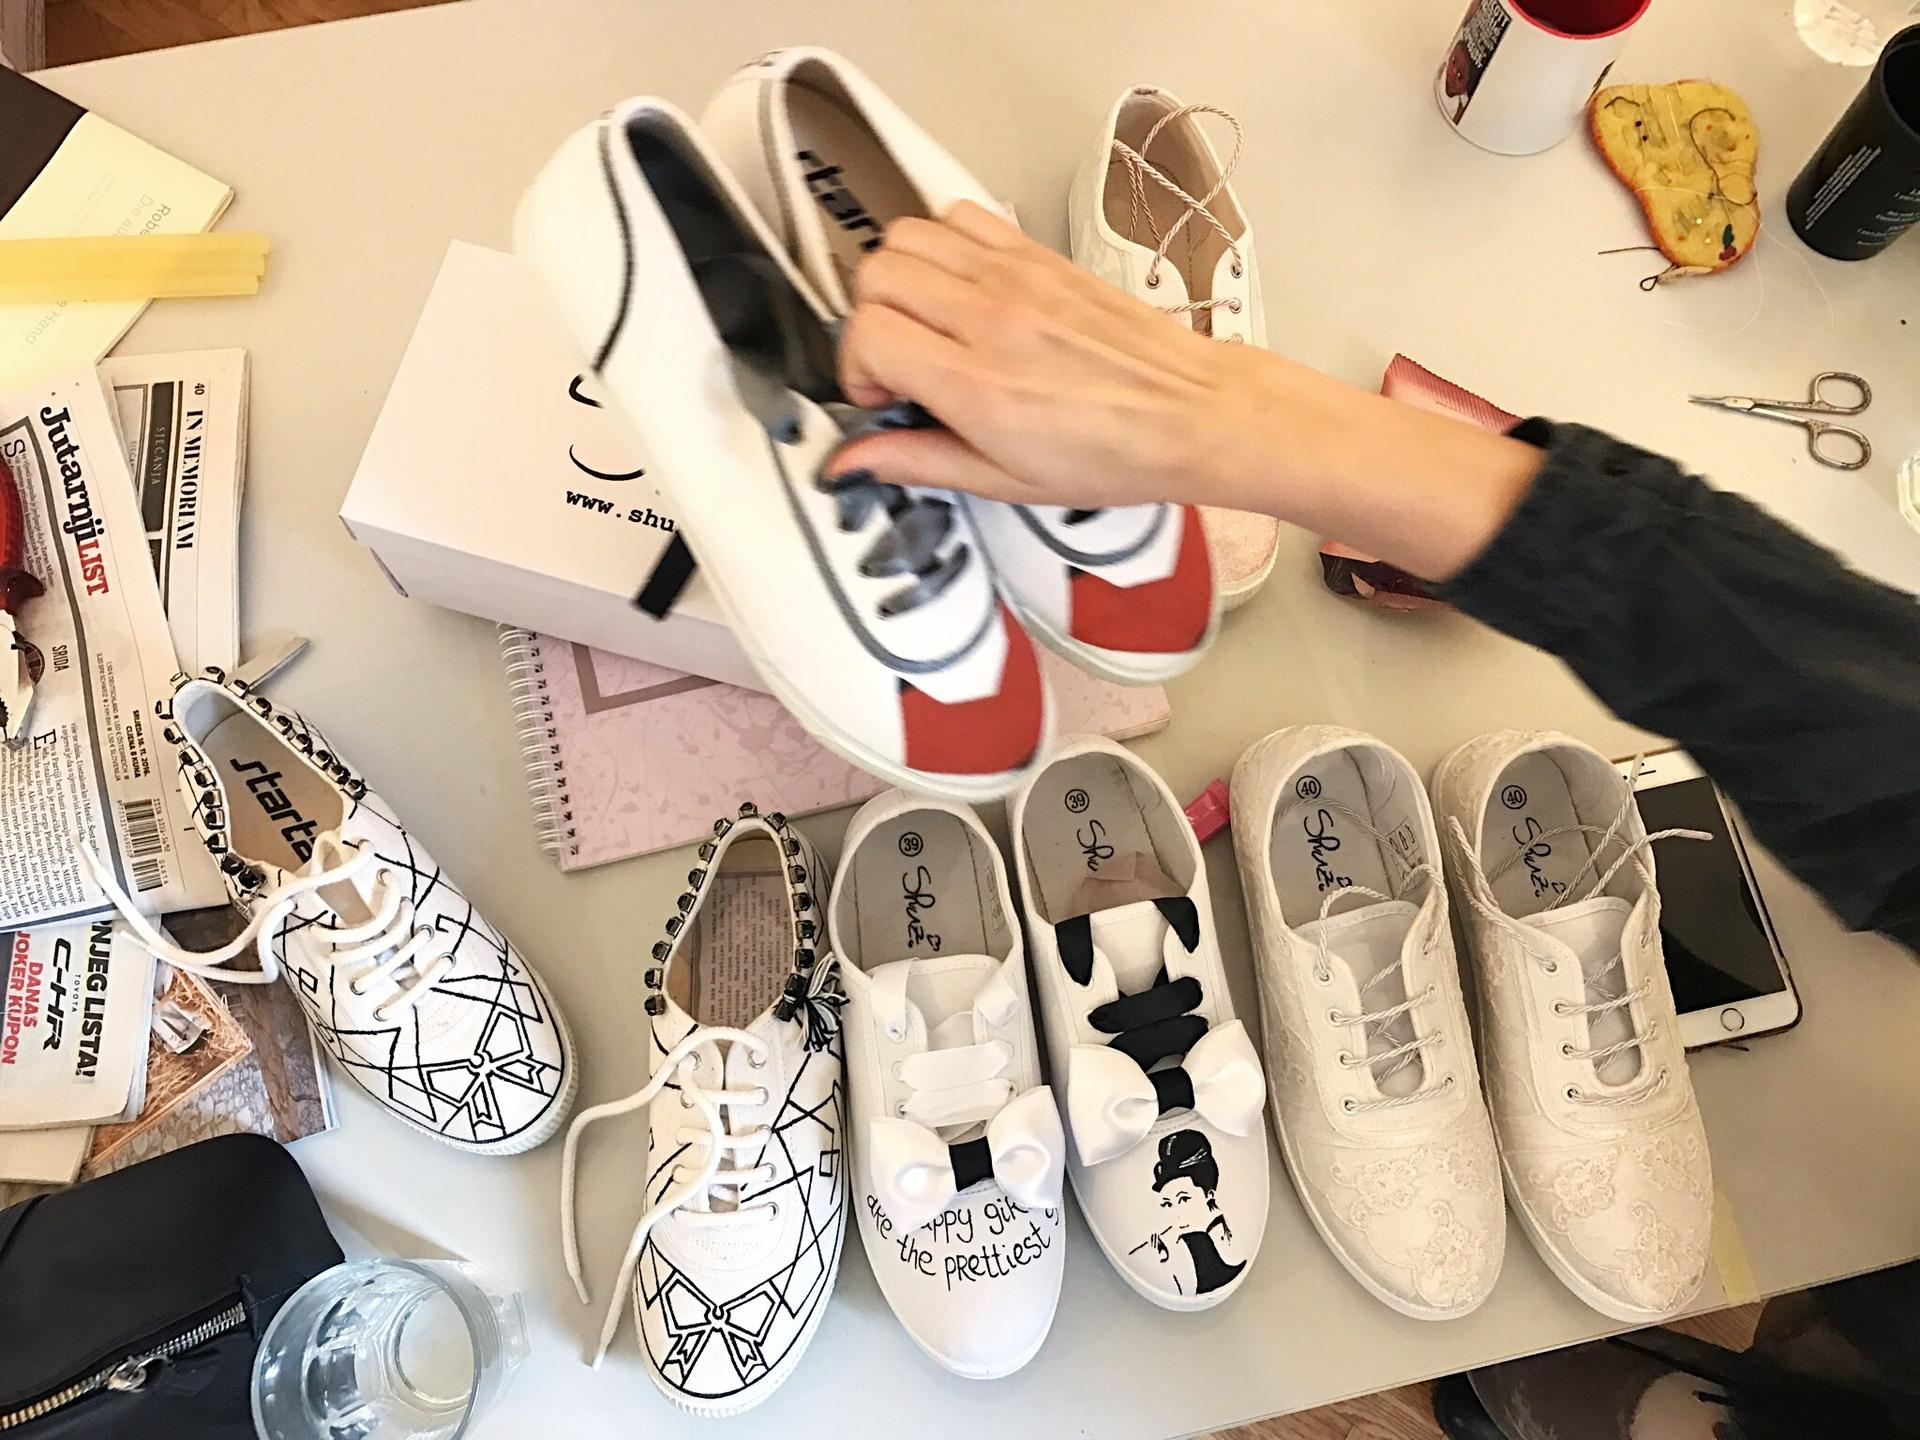 Maja Žirovčić rearranges the hand-painted shoes she's designed with co-founder, Ljudmila Mihajlović.